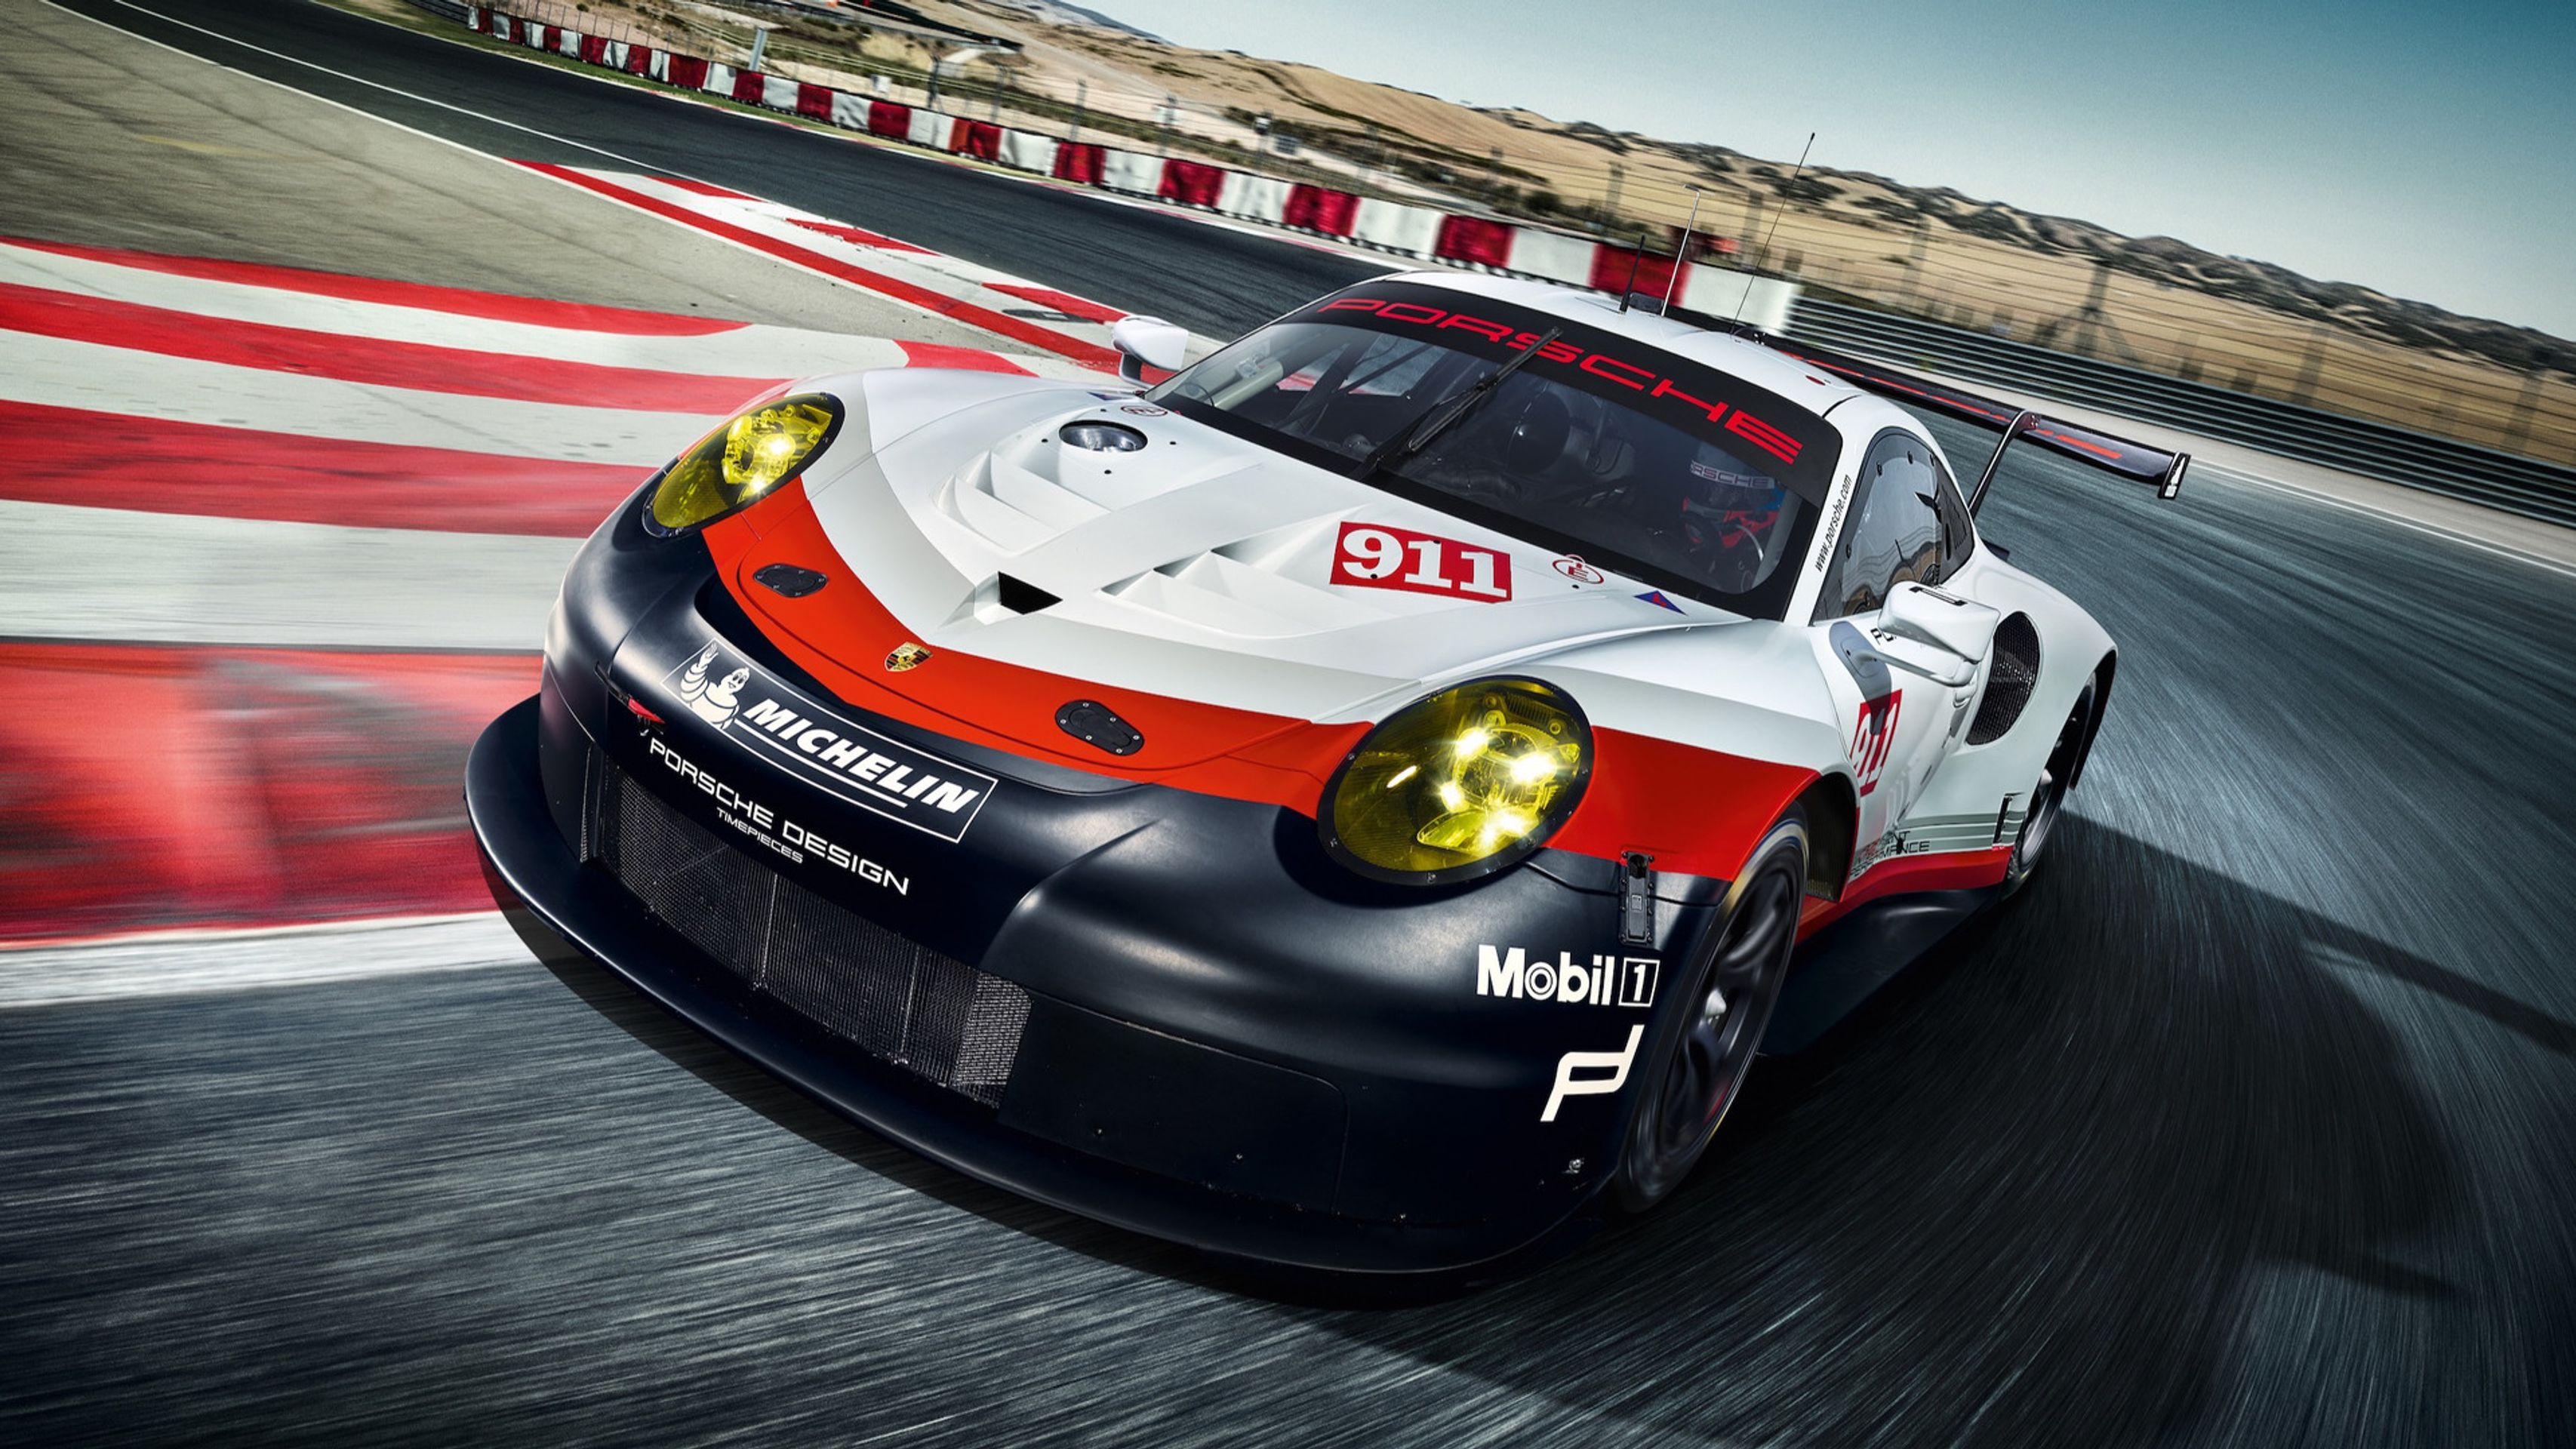 RSR - 12 - GALERIE: Porsche 911 RSR (6/6)